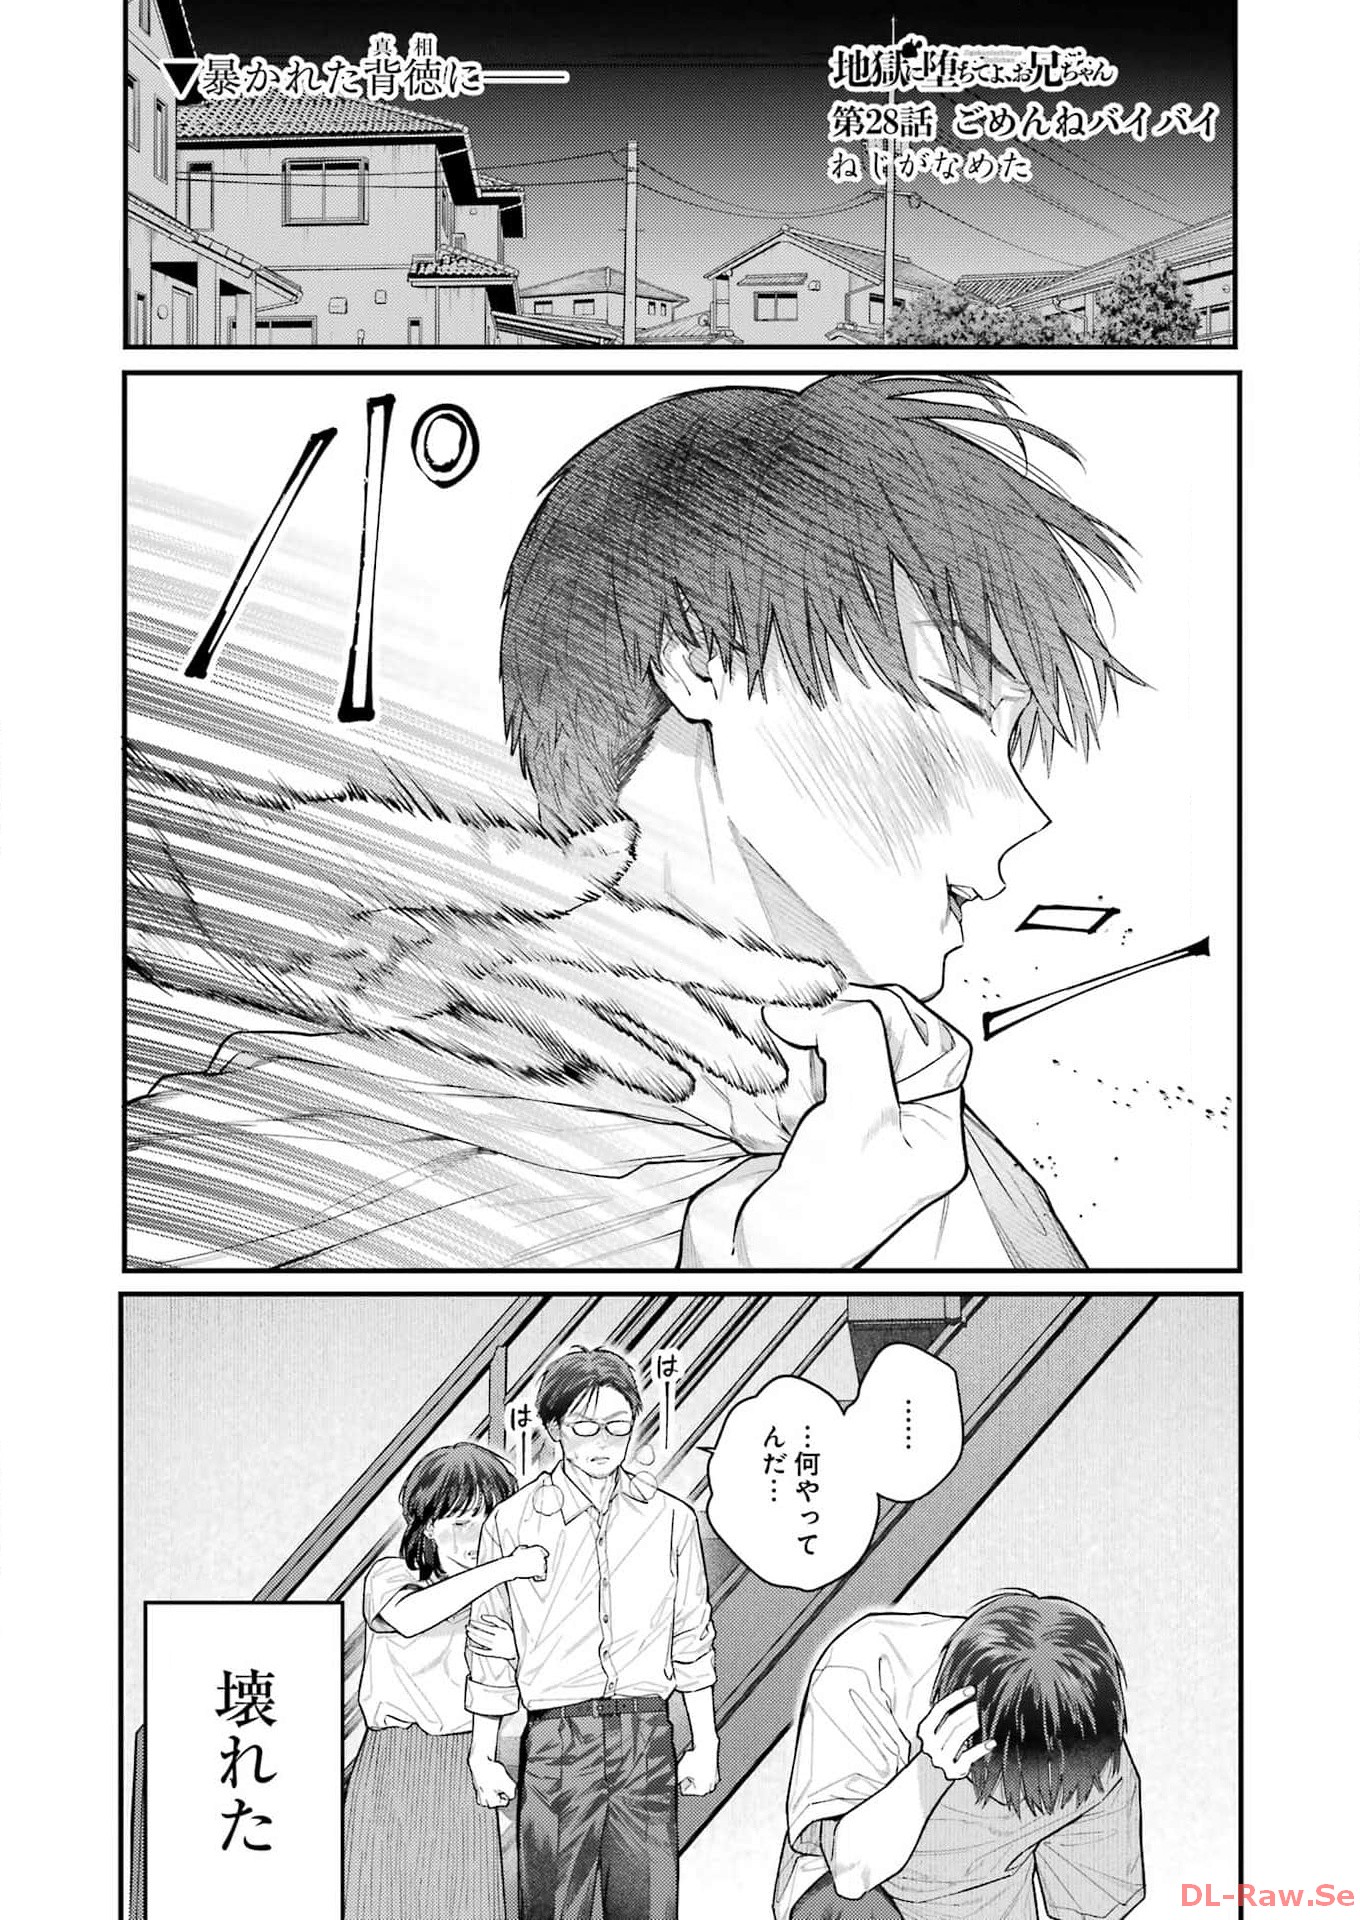 Jigoku ni Ochite yo, Onii-chan - Chapter 28 - Page 1